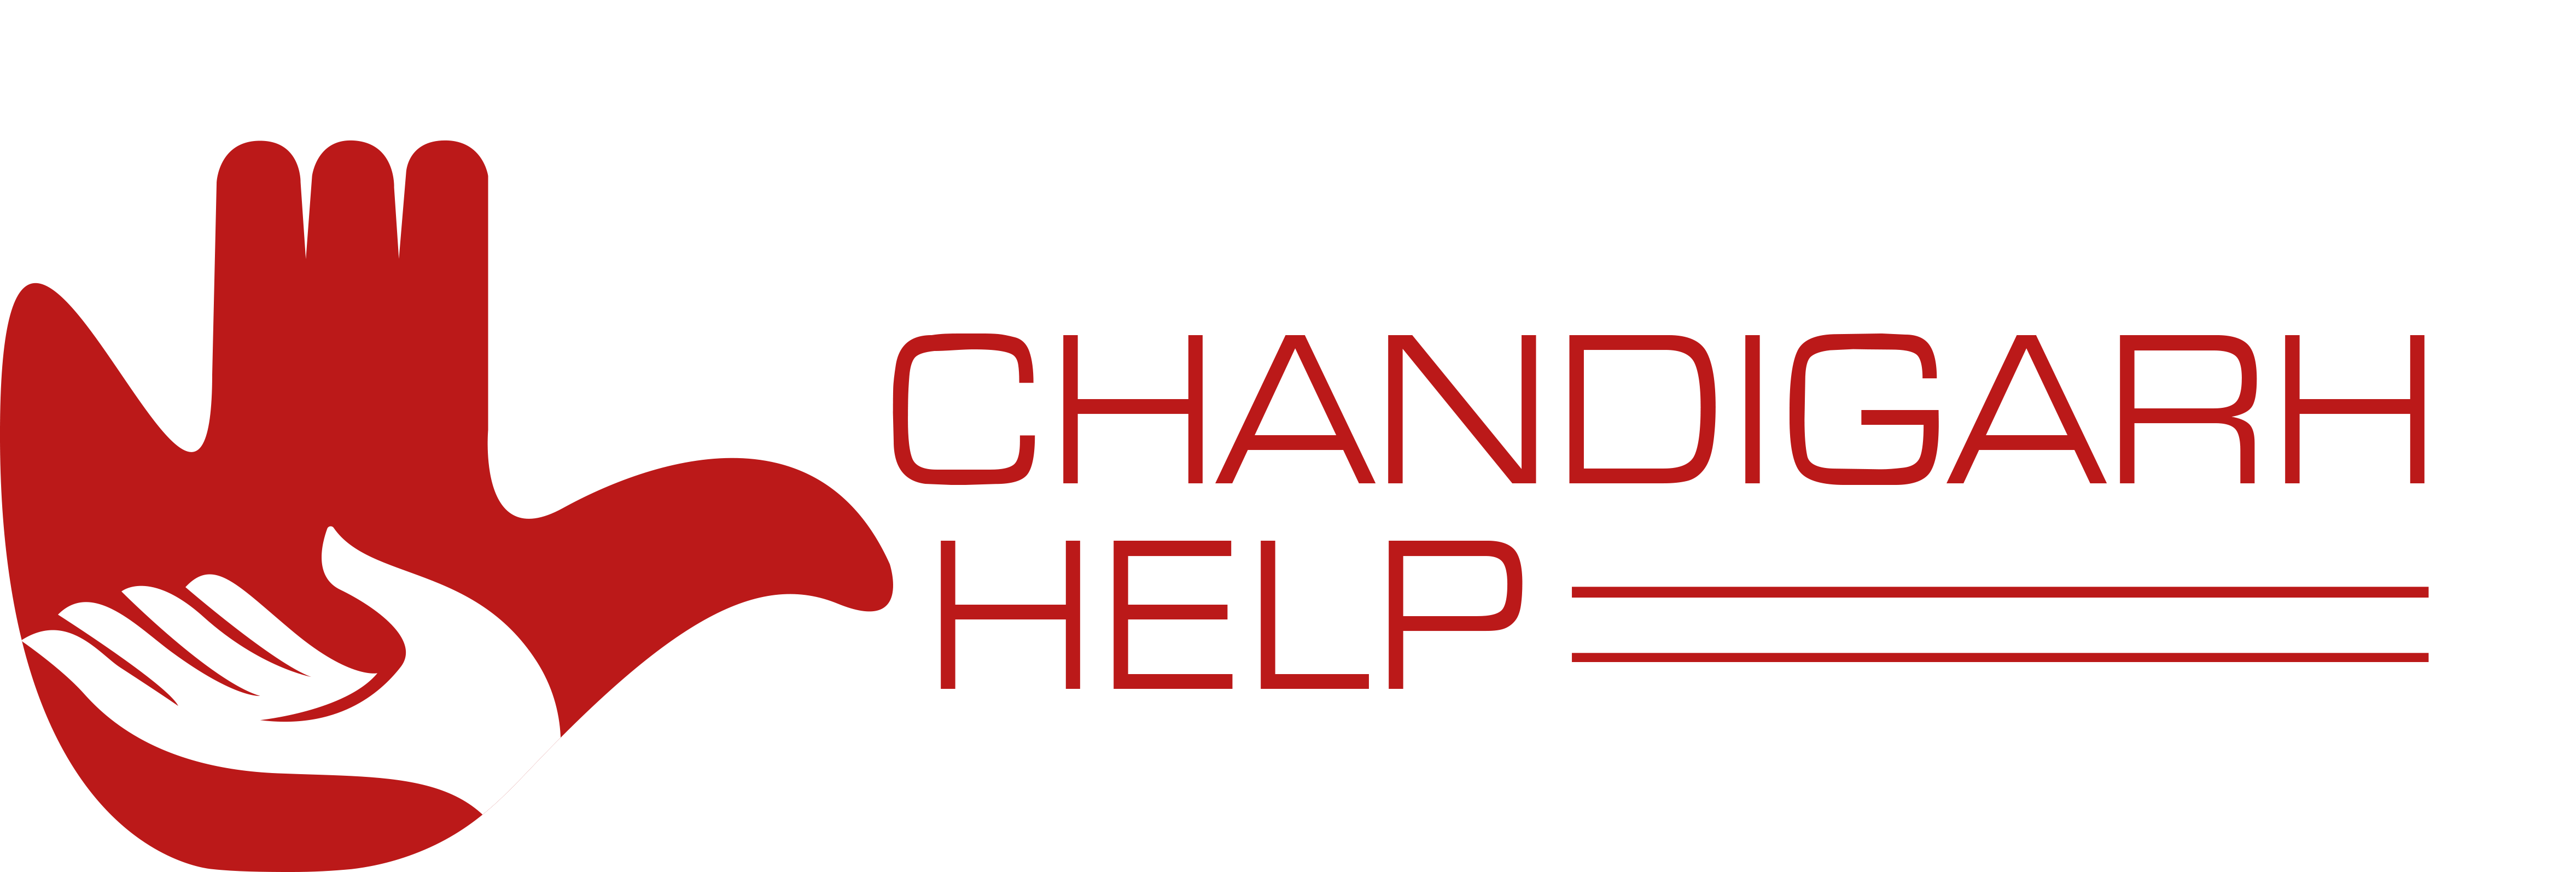 Chandigarh help logo